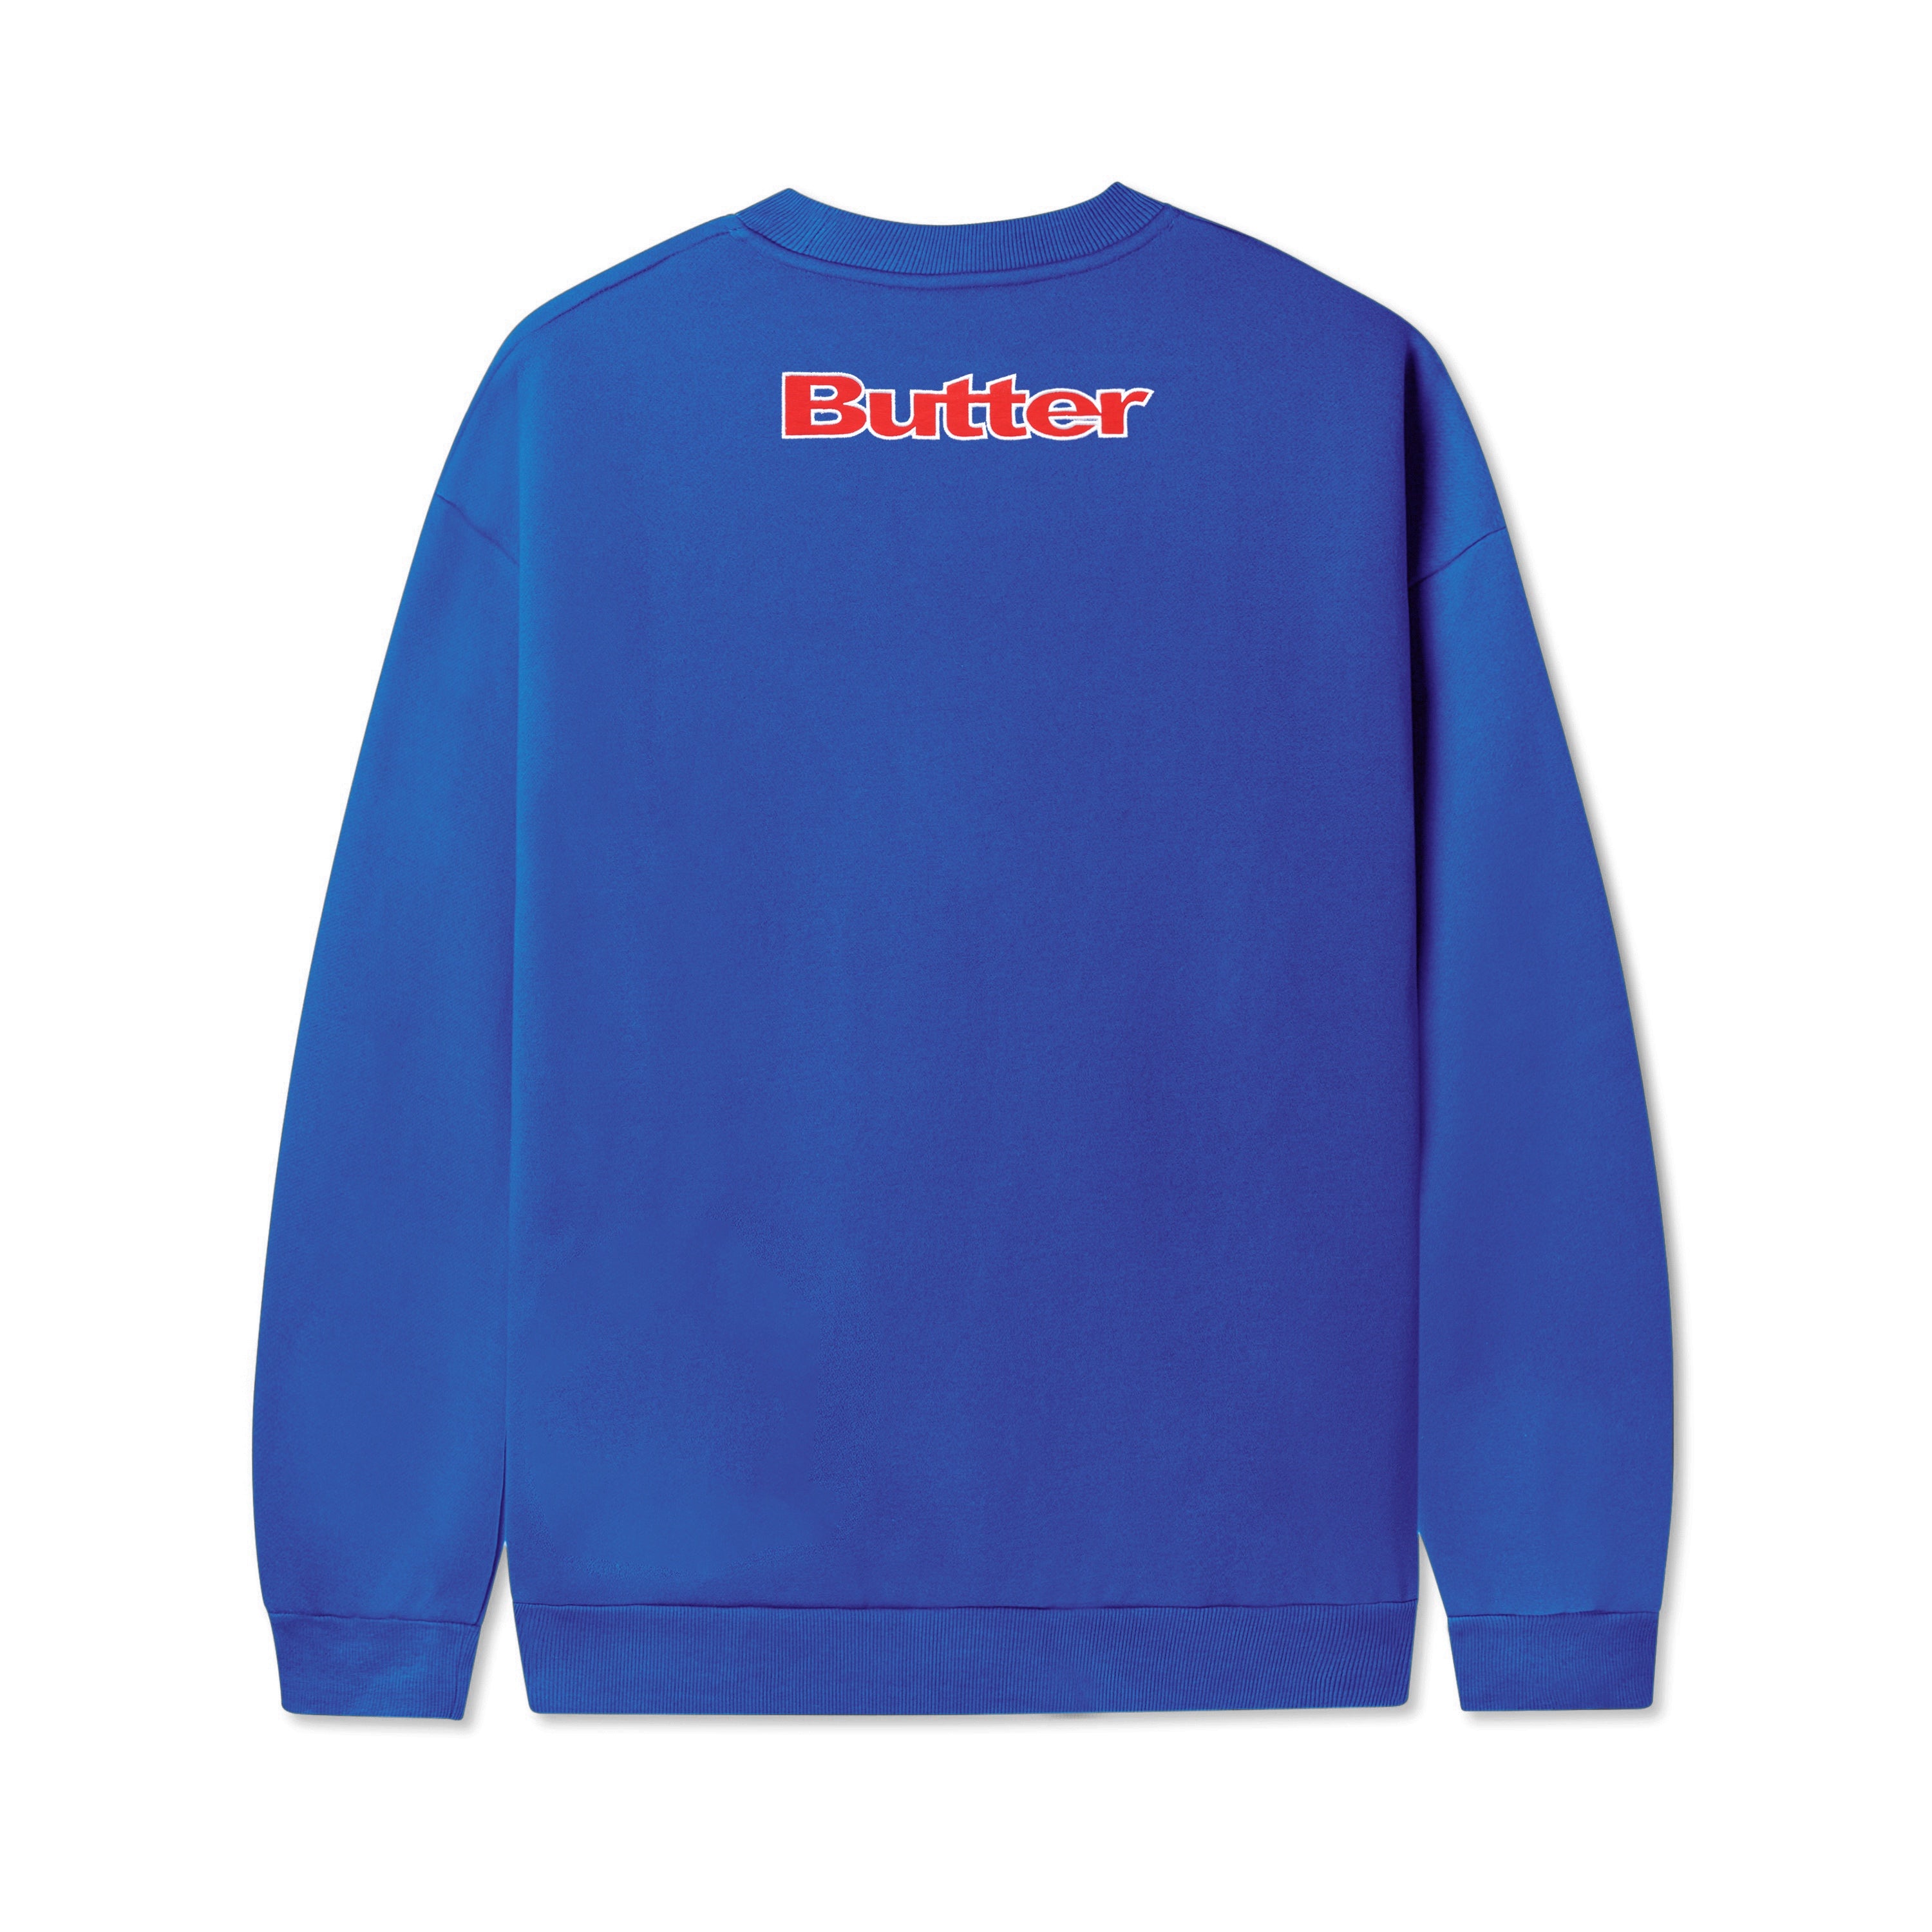 Butter Goods x Fantasia Crewneck Sweatshirt - Royal Blue